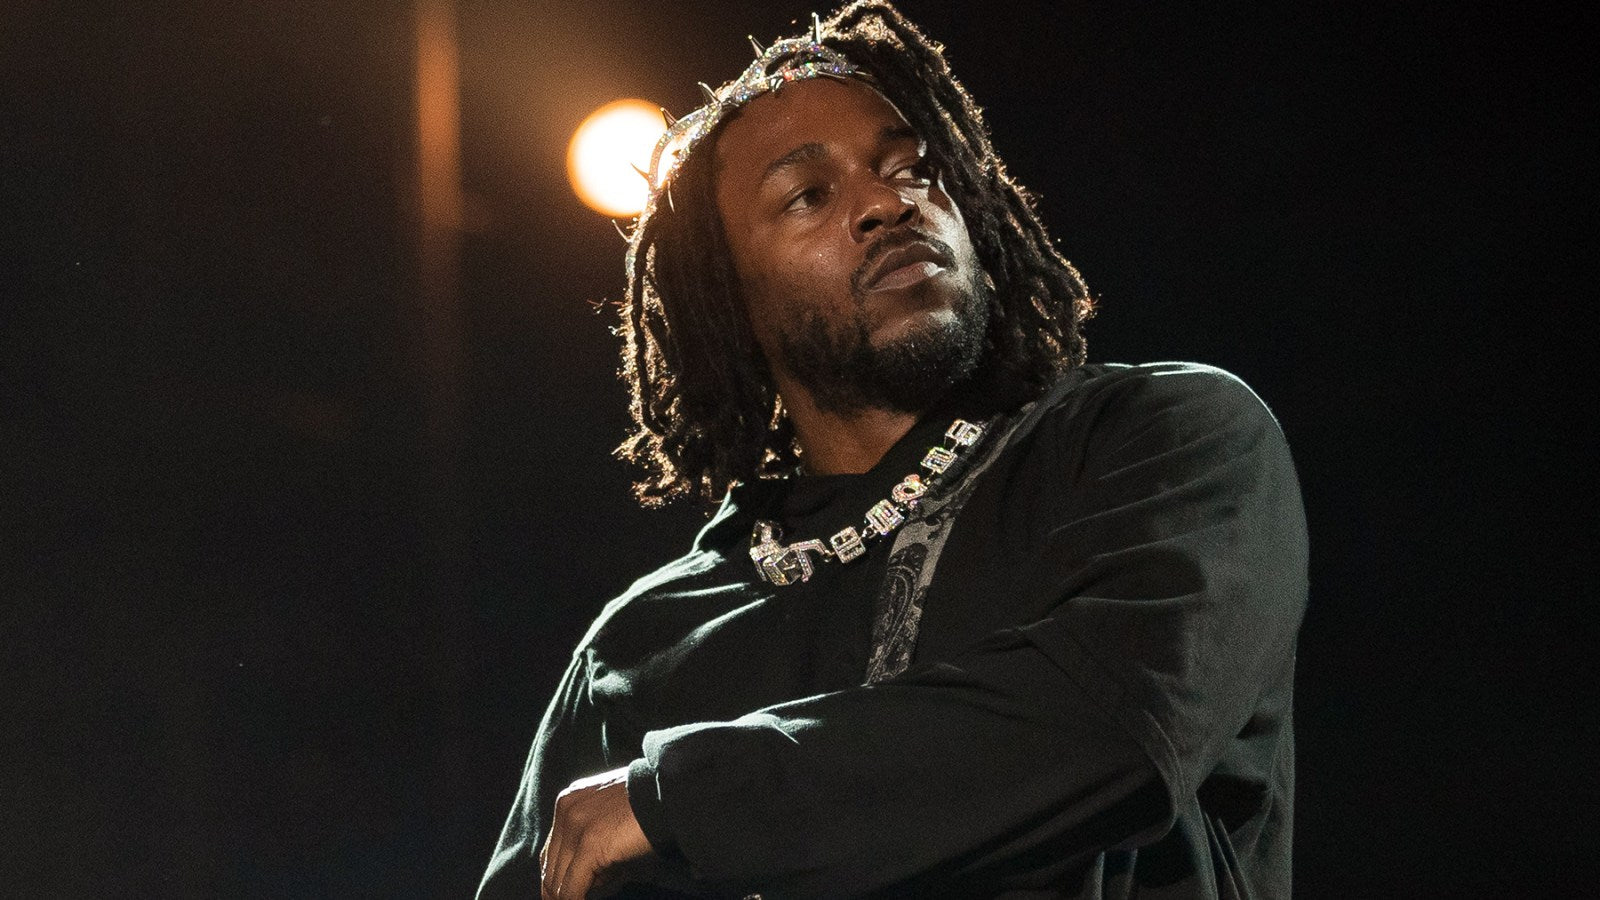 Analyse des Diss-Tracks de Kendrick Lamar envers Drake